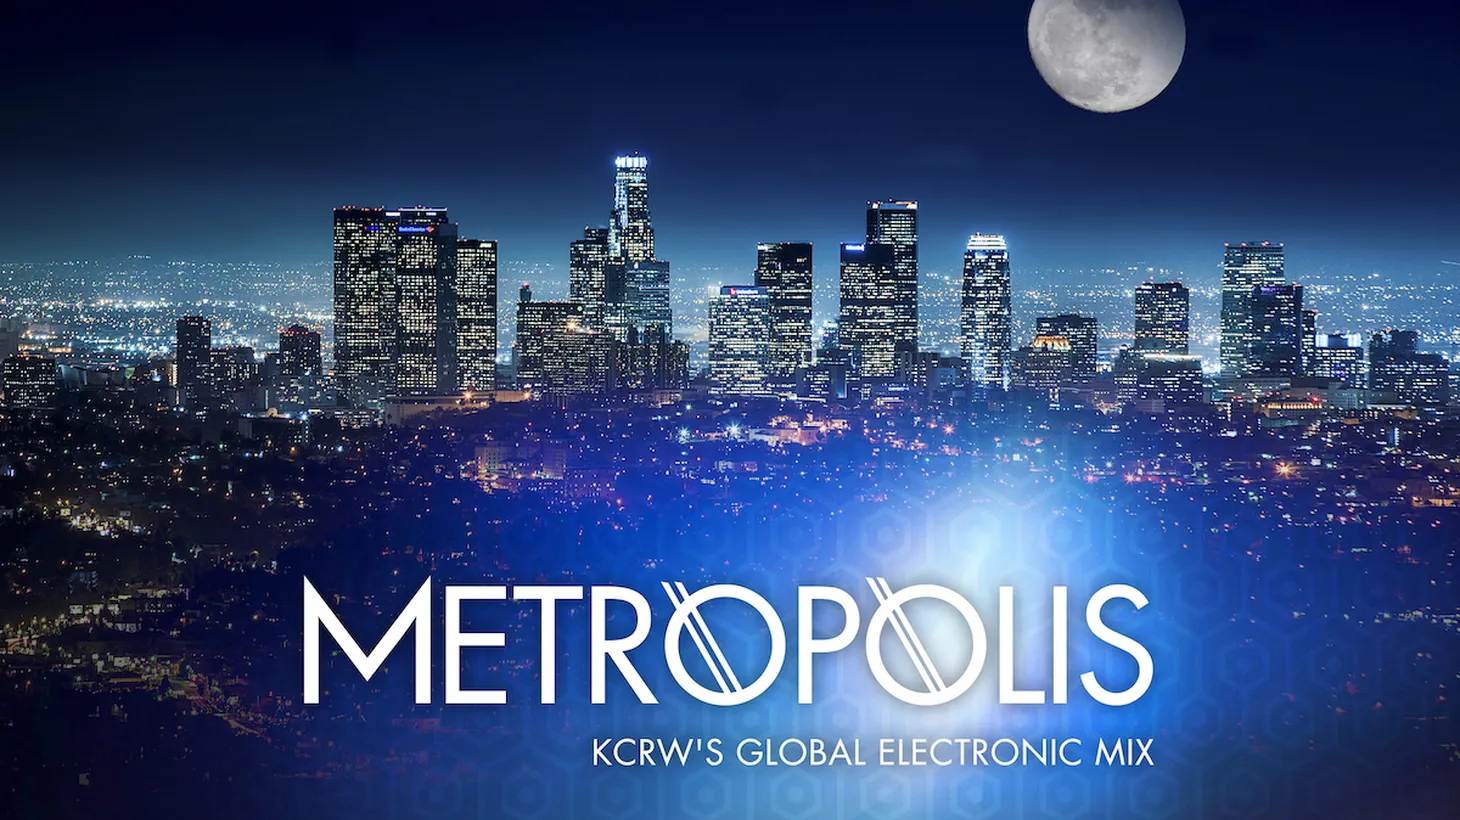 Metropolis playlist, October 16, 2021.